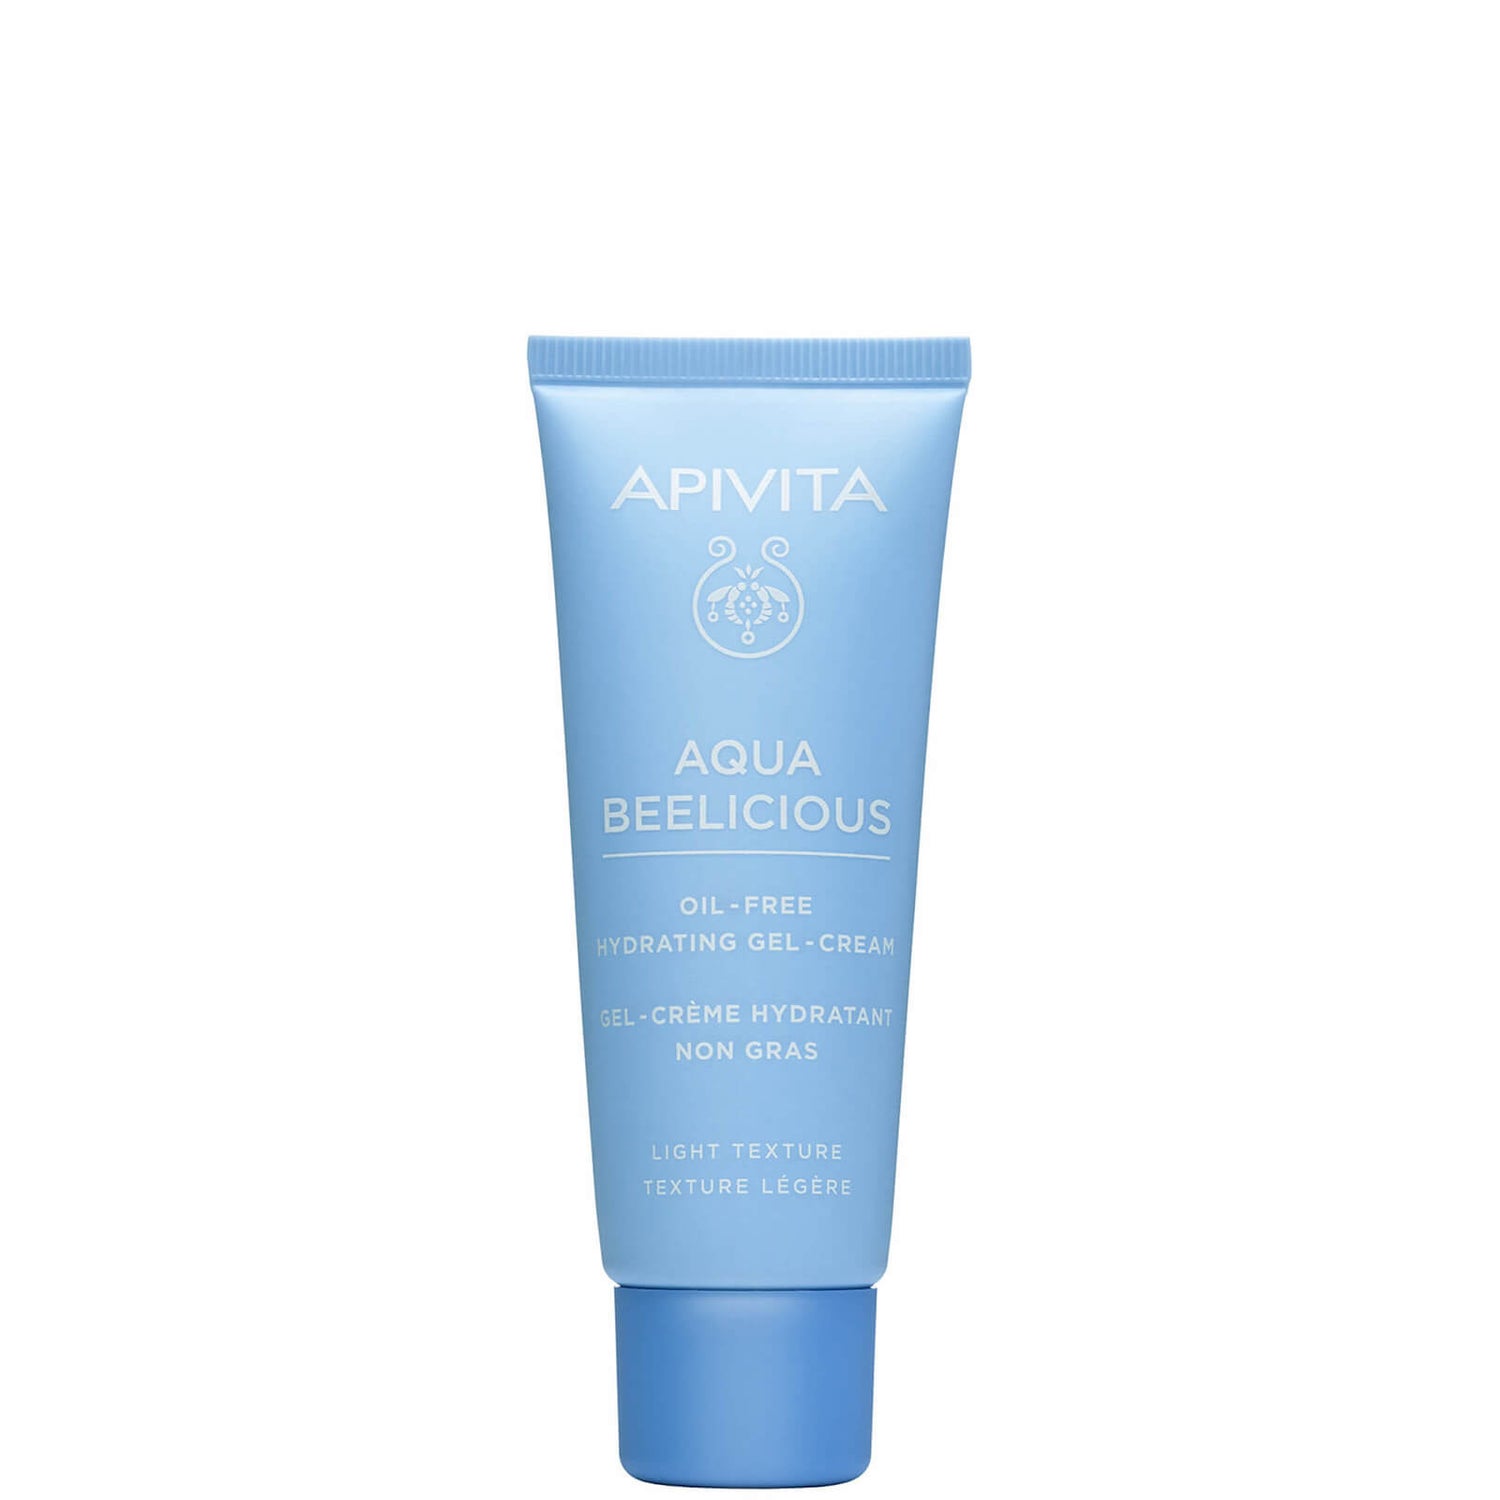 APIVITA Aqua Beelicious Oil-Free Hydrating Light Texture Gel-Cream 1.35 fl. oz